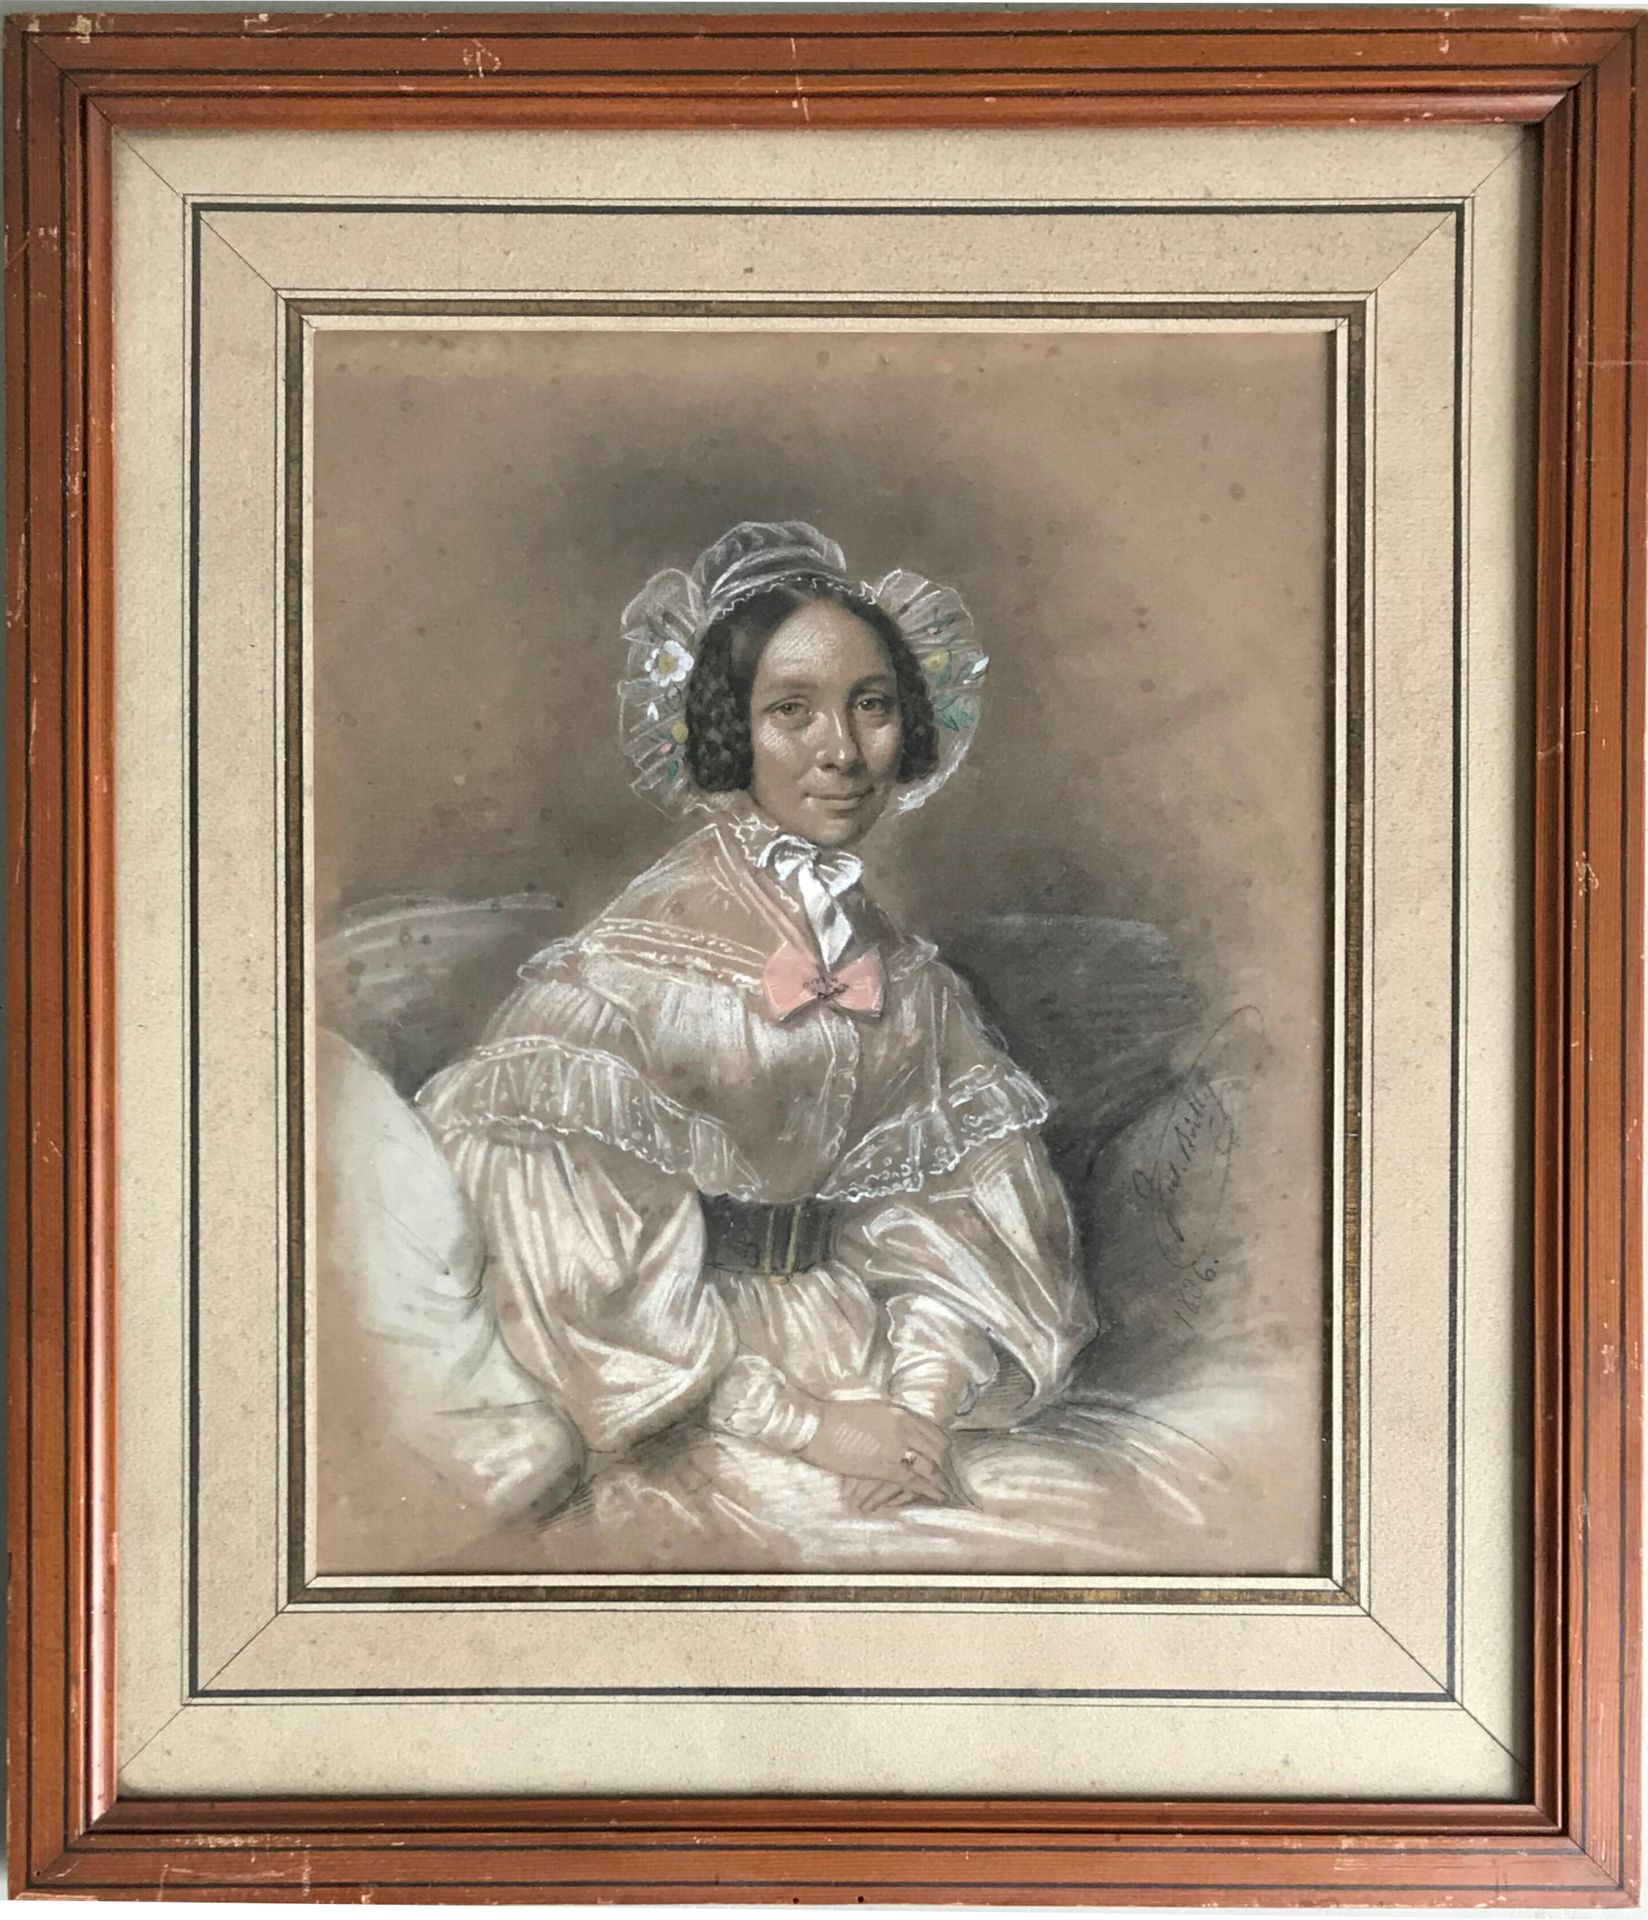 BOILLY 朱利安-莱奥波利 (1796-1874)

戴蕾丝帽的女人肖像

带白色高光的铅笔画

右下方有签名

带圆角的木质框架

30 x 24 厘米